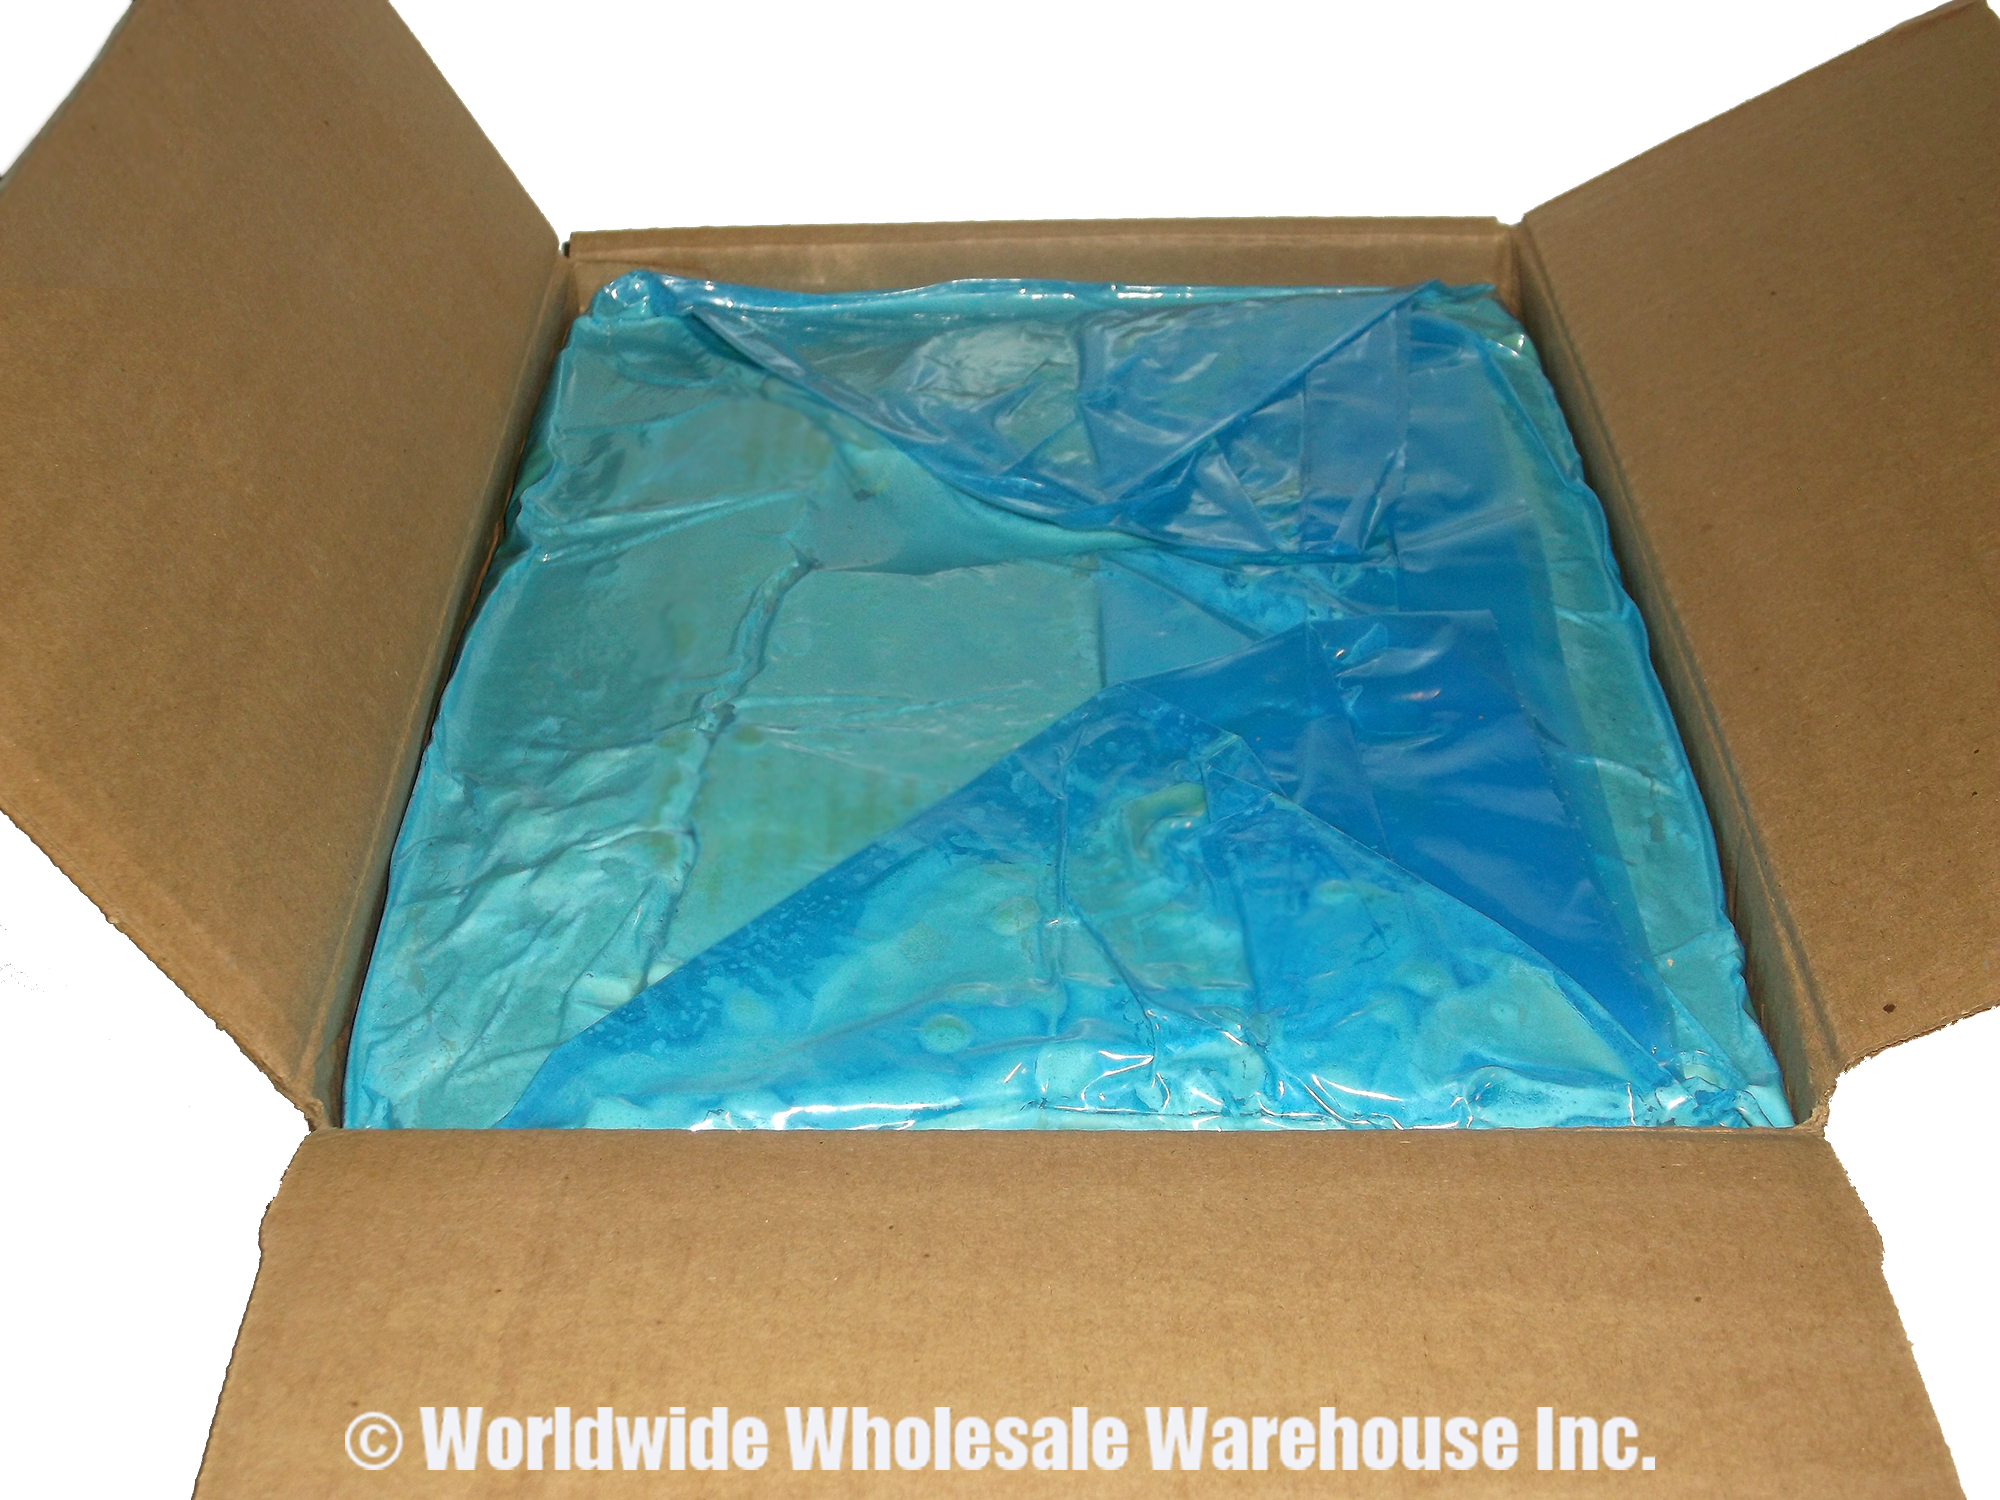 Wholesale Raw Shea Butter - Worldwide Wholesale Warehouse